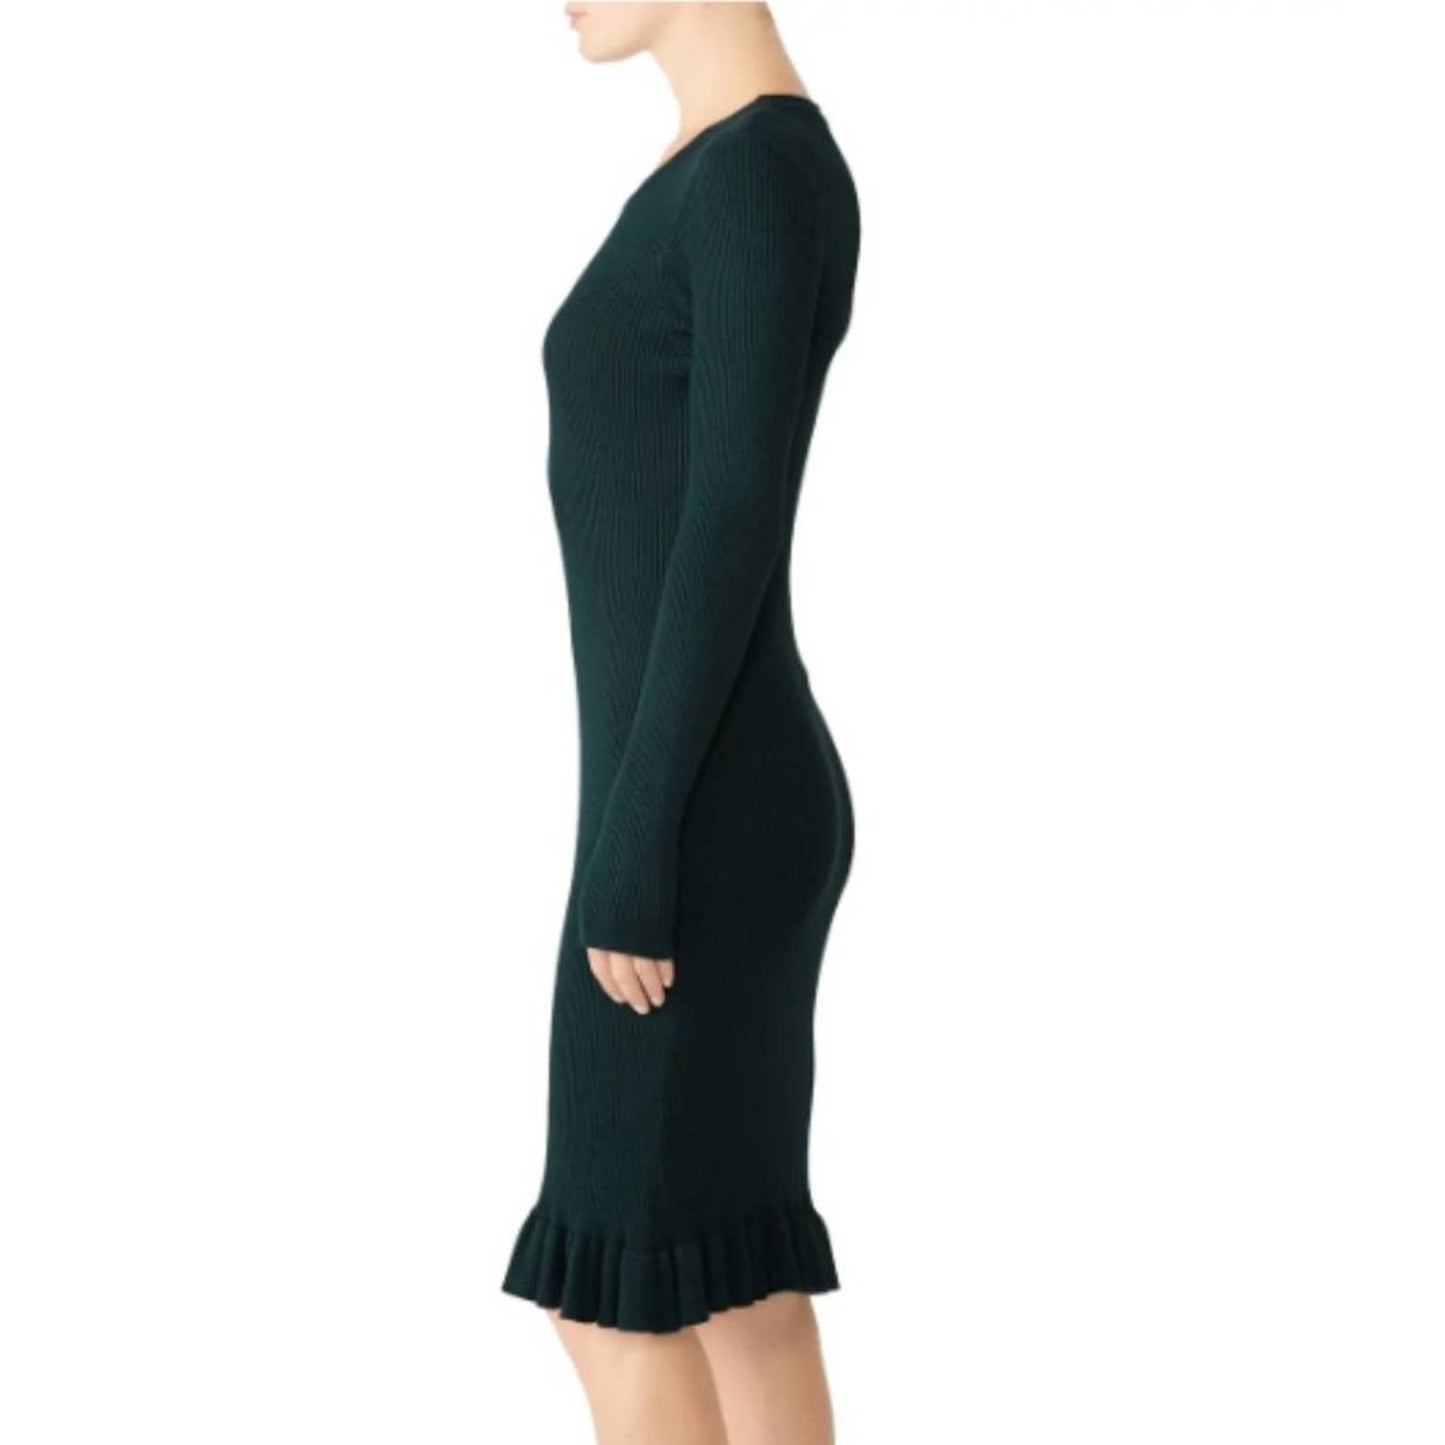 Anthropologie John + Jenn Knit Ribbed Green Sweater Dress Size Medium